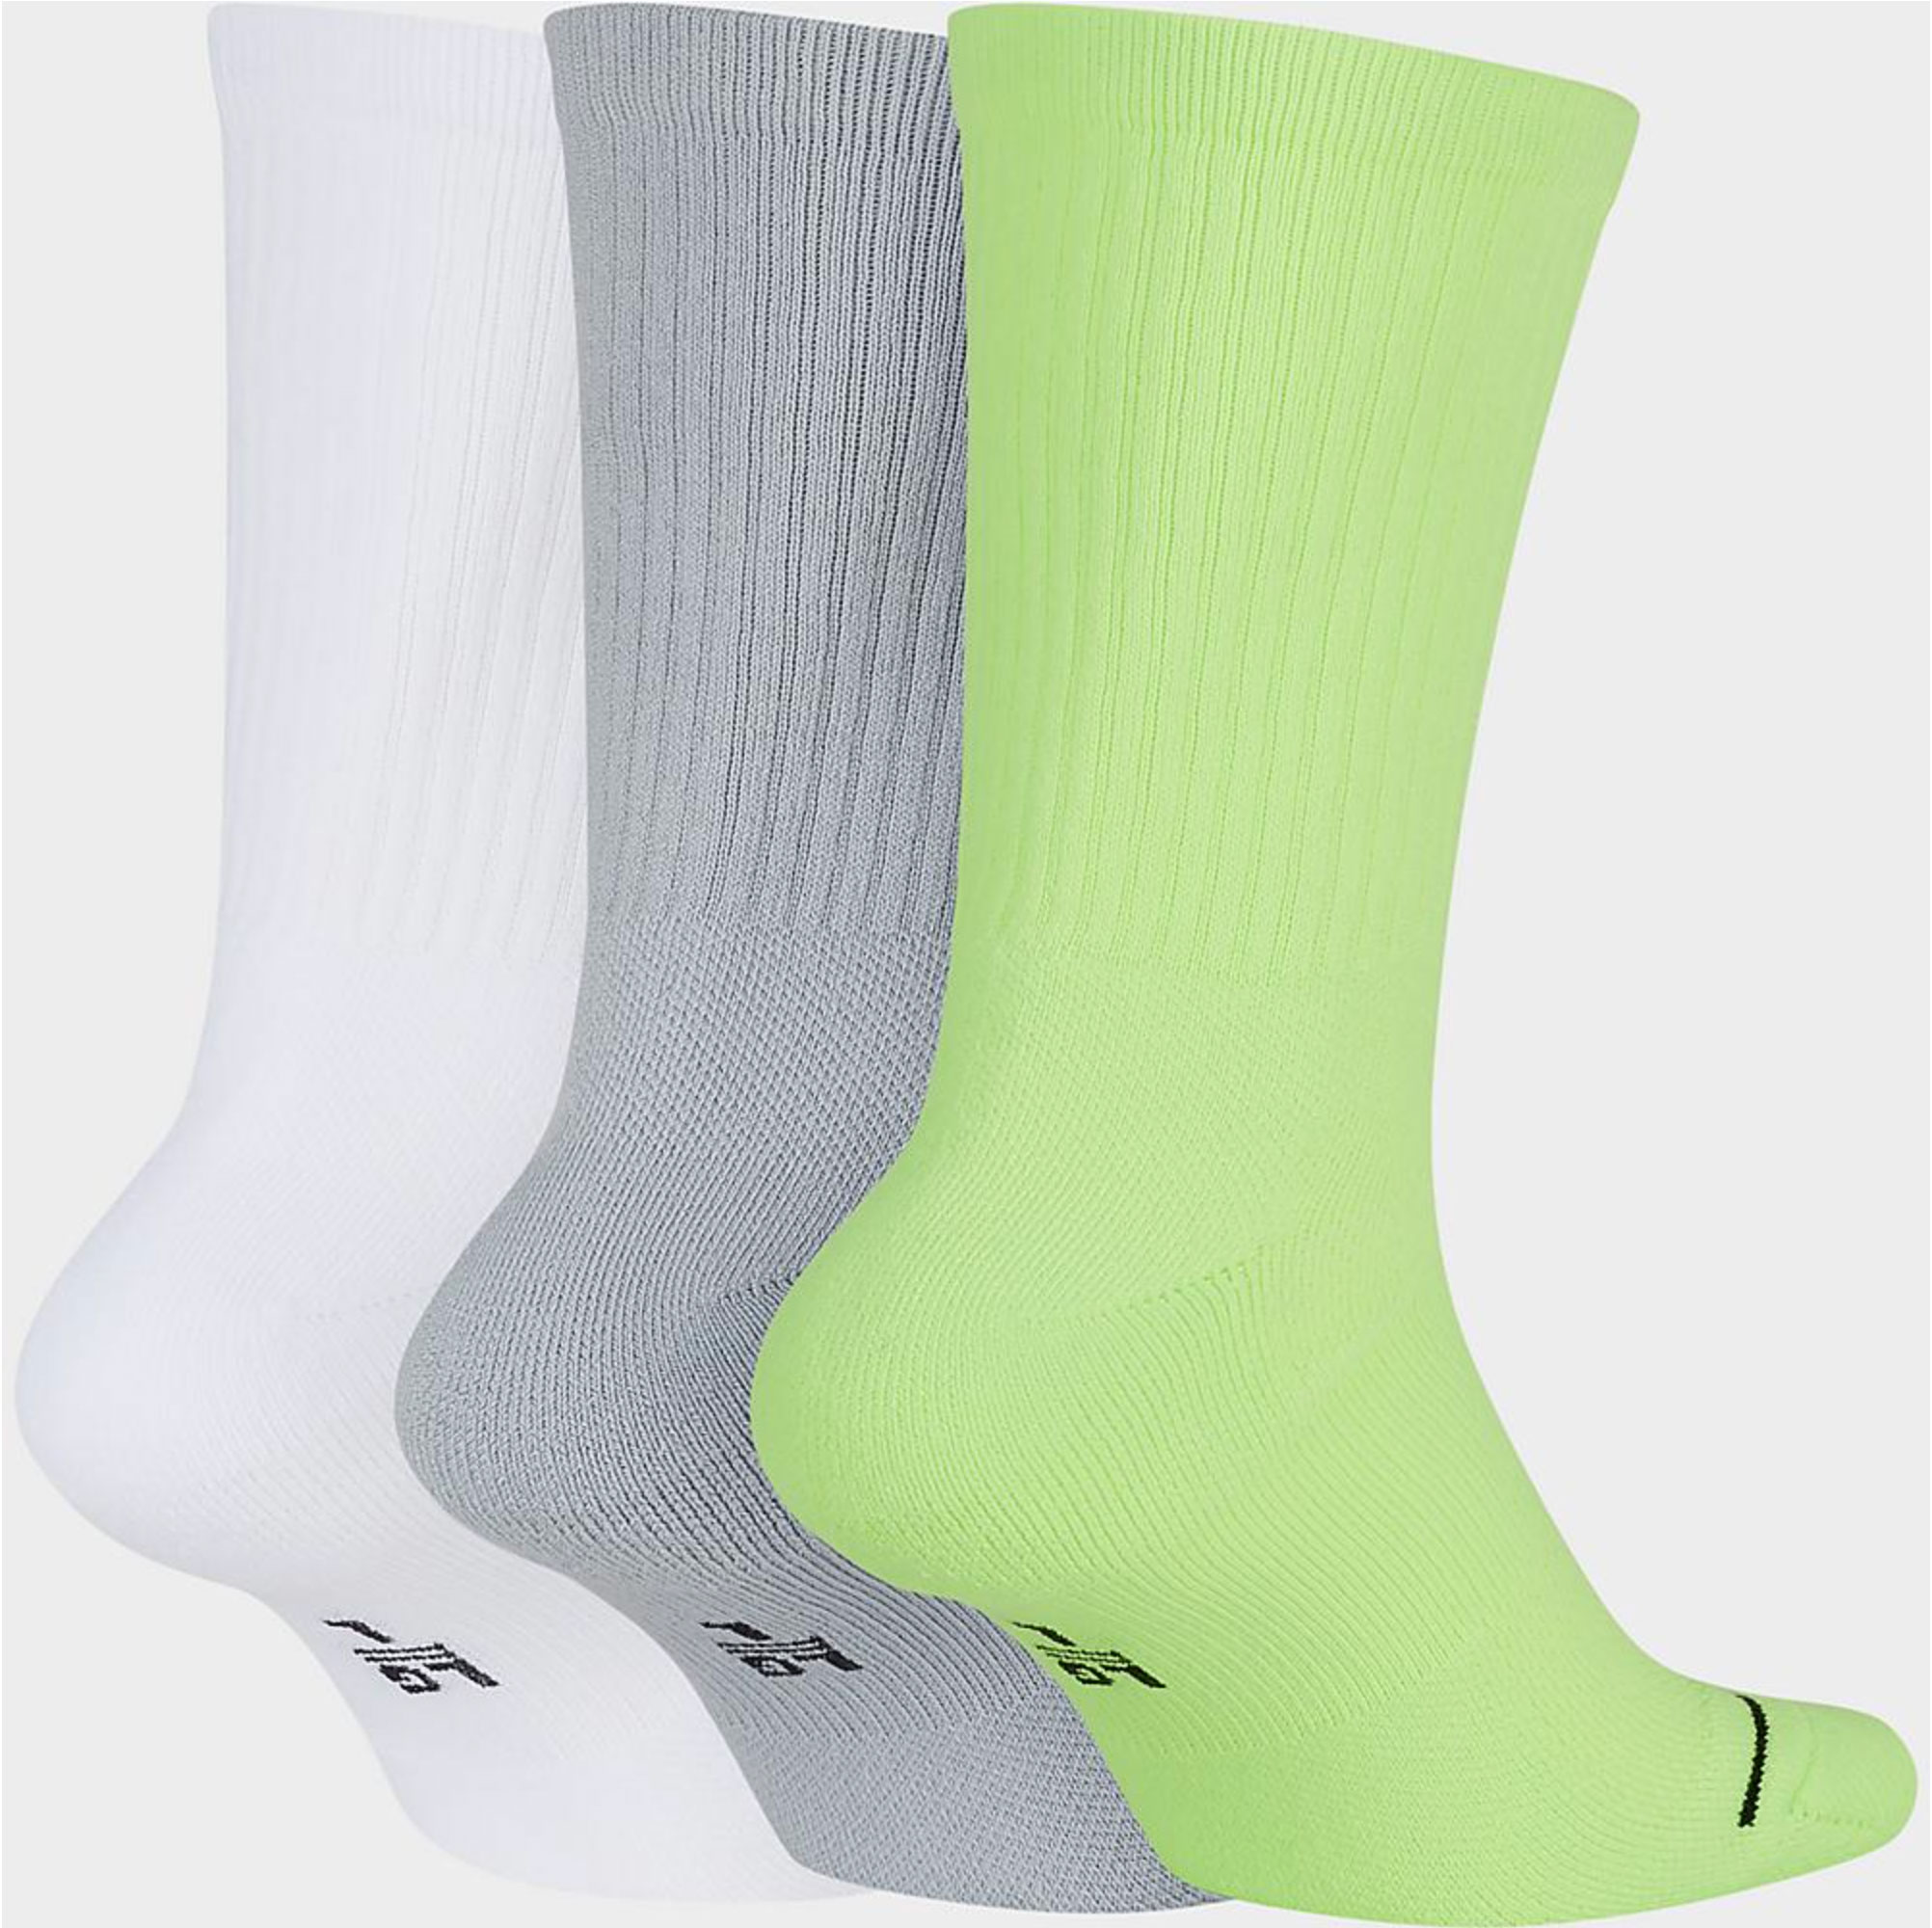 jordan-neon-volt-grey-socks-2